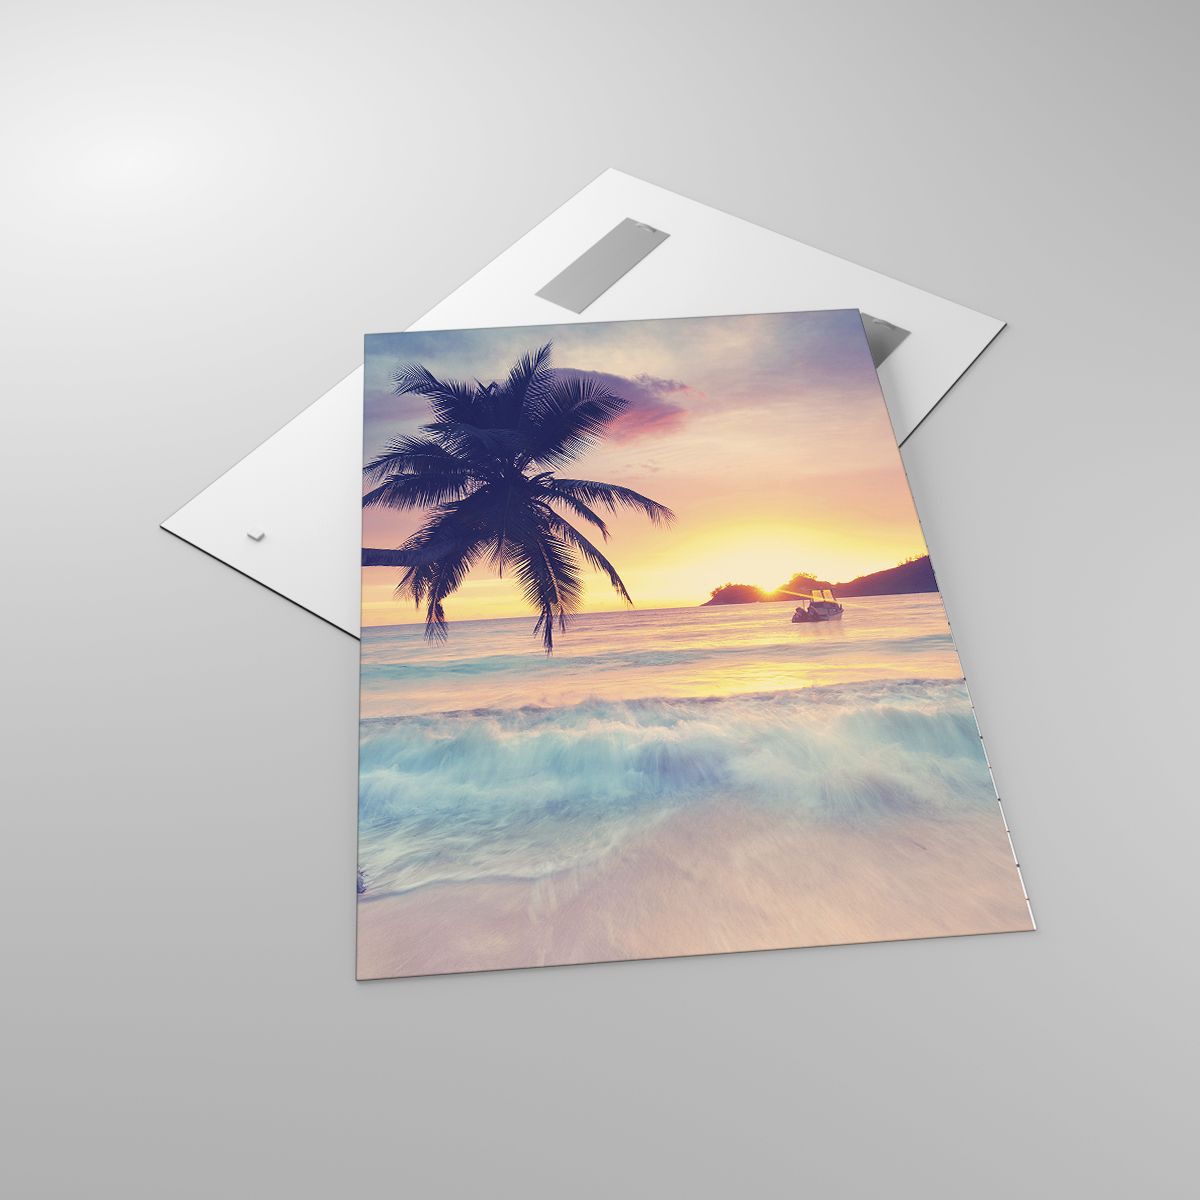 Glasbild Landschaft, Glasbild Kokusnuss-Palme, Glasbild Meer, Glasbild Strand, Glasbild Der Sonnenuntergang